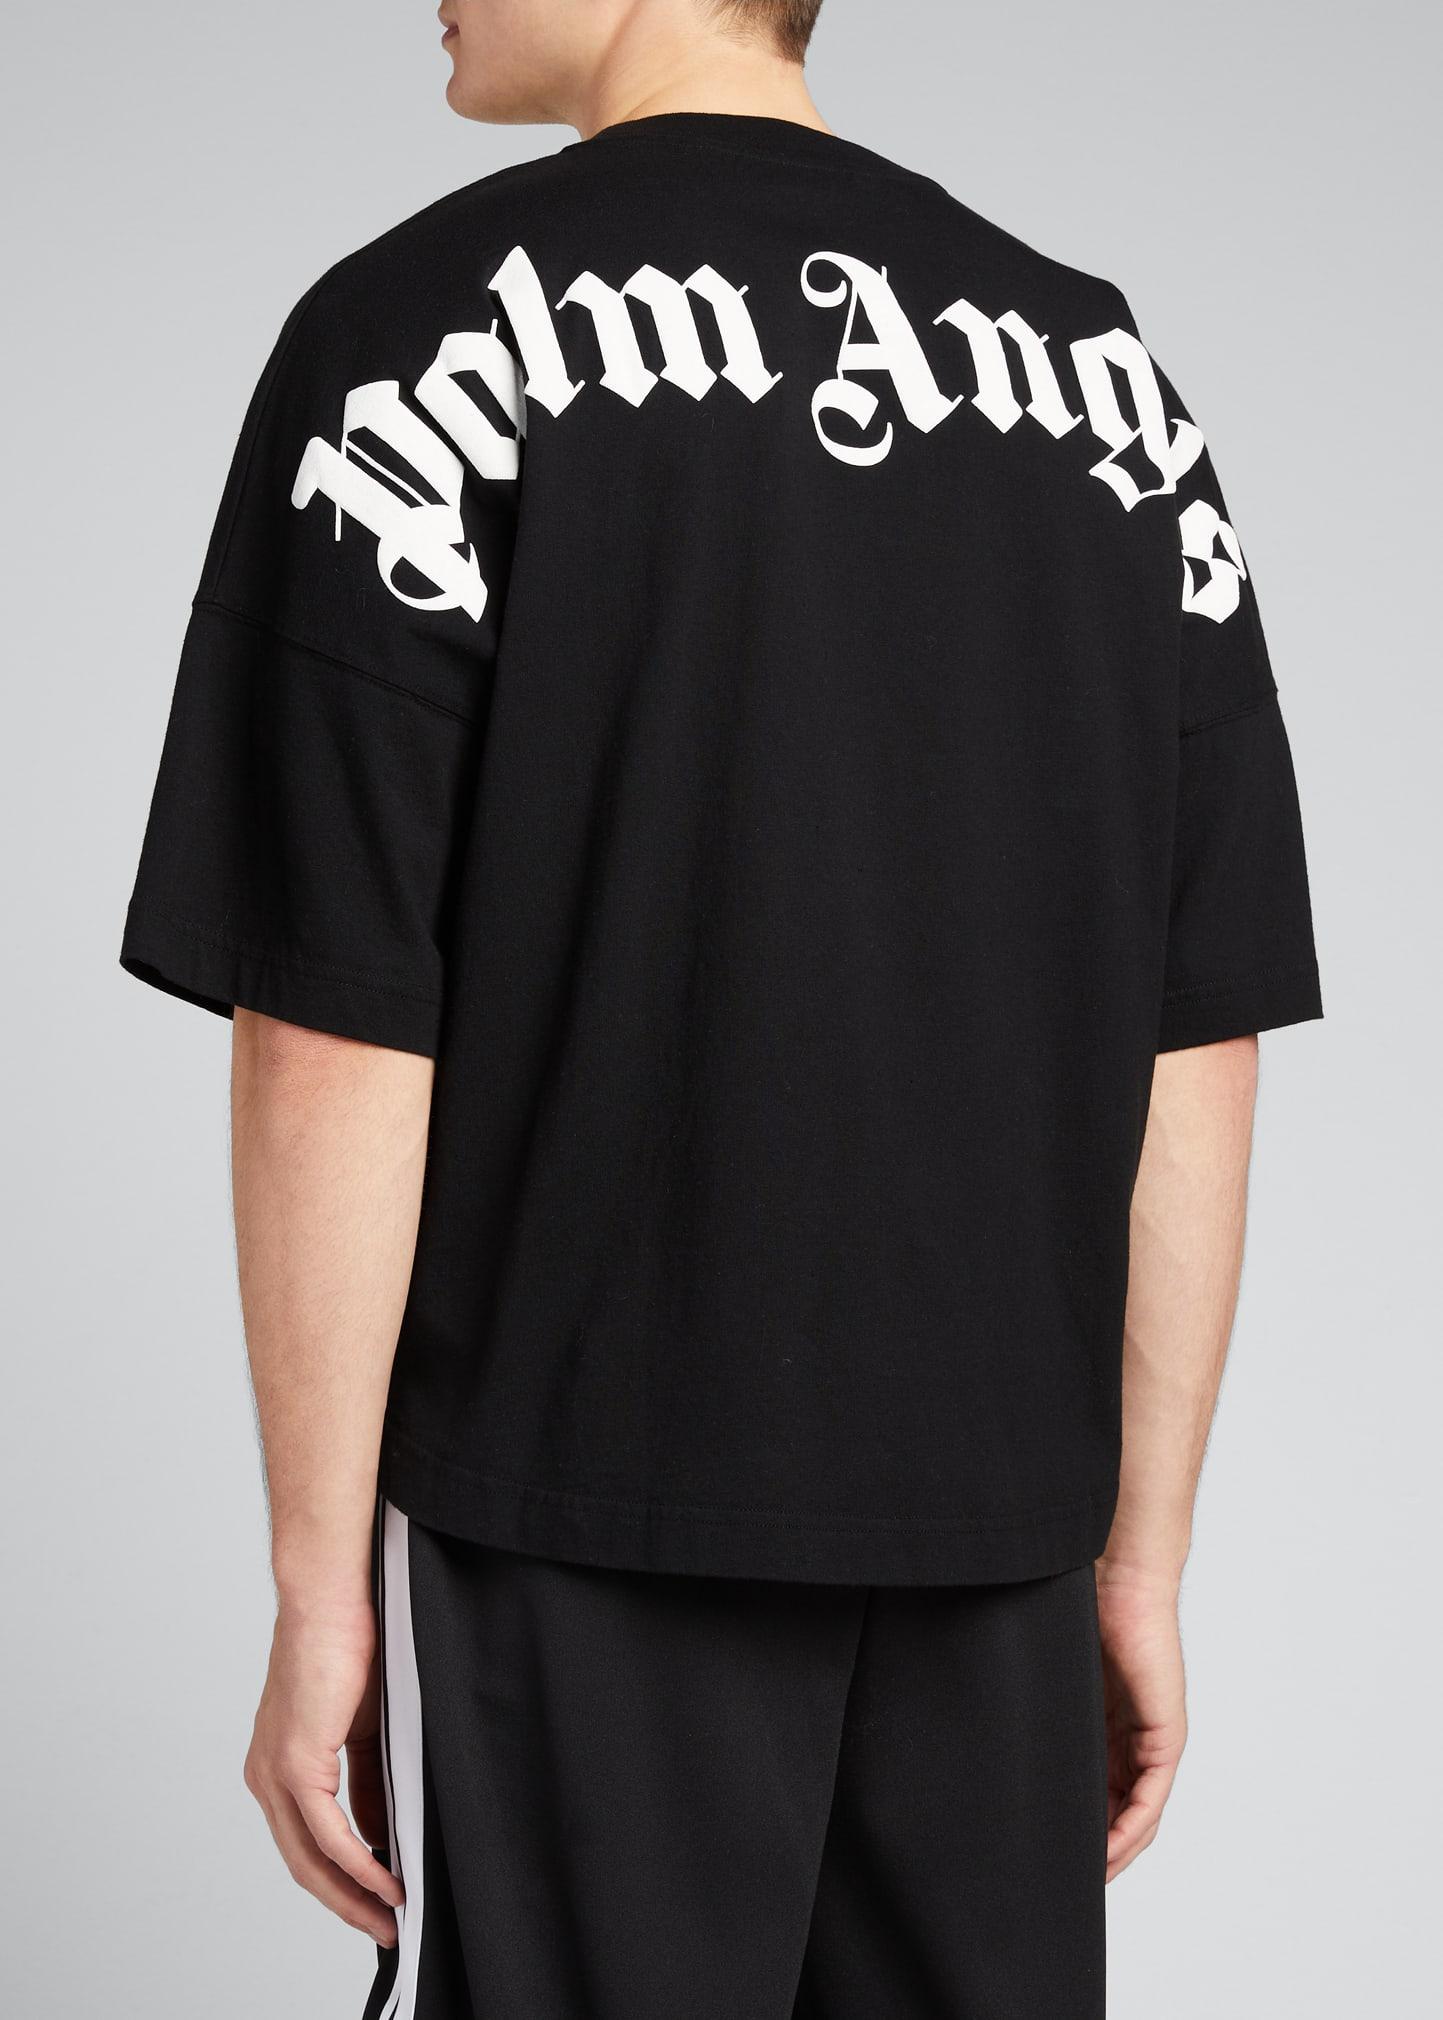 Palm Angels Oversized Mock-neck Logo T-shirt in Black for Men | Lyst